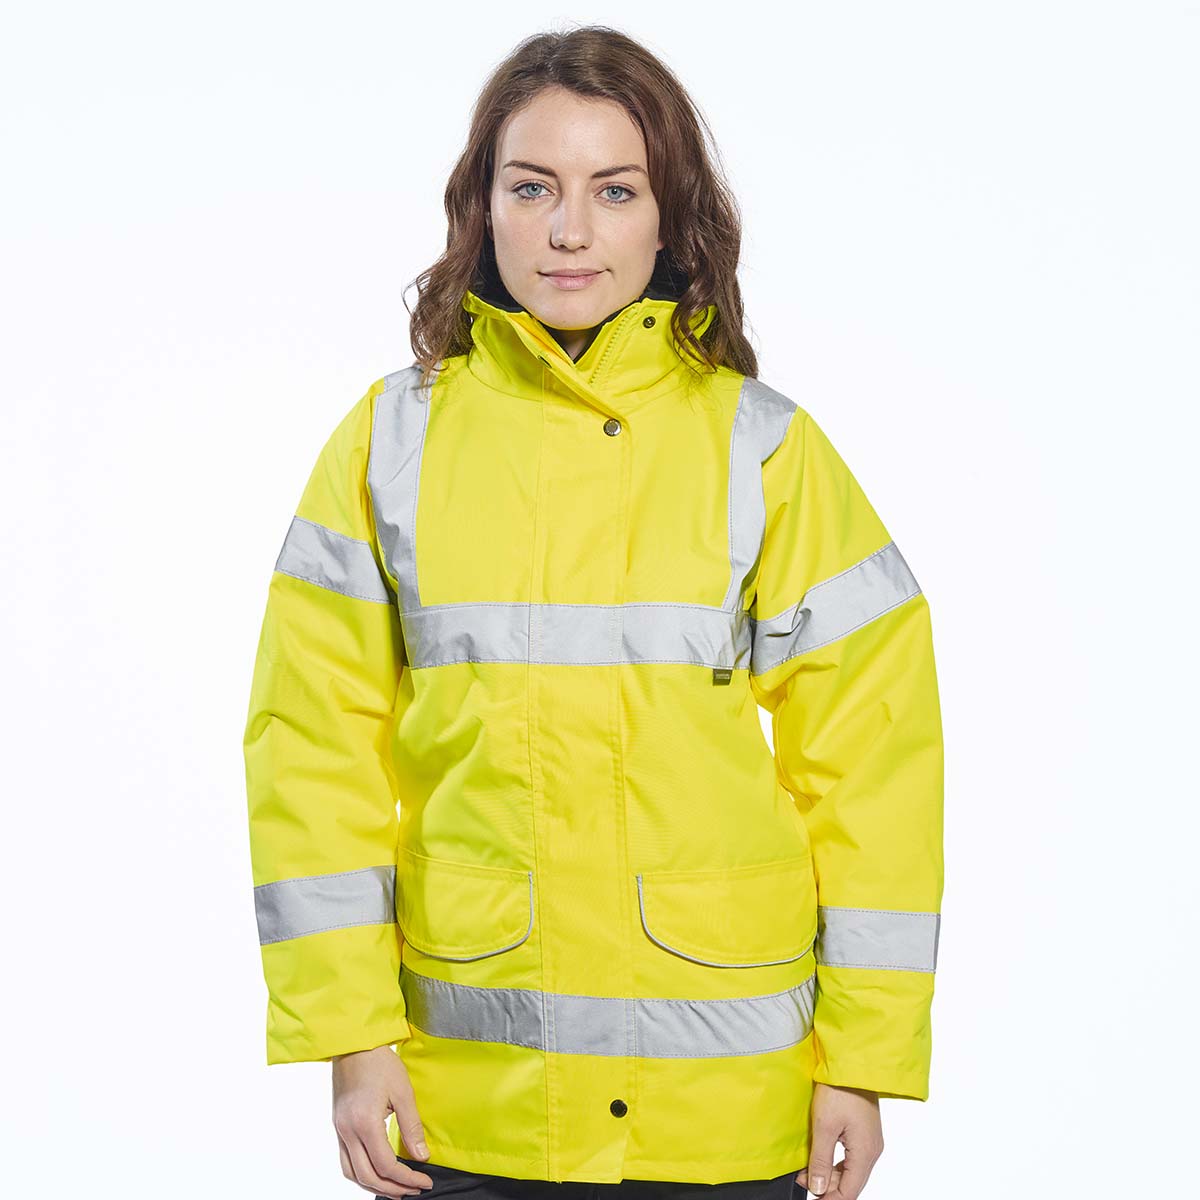 Portwest S360 Hi-Vis Women's Traffic Jacket Yellow 1